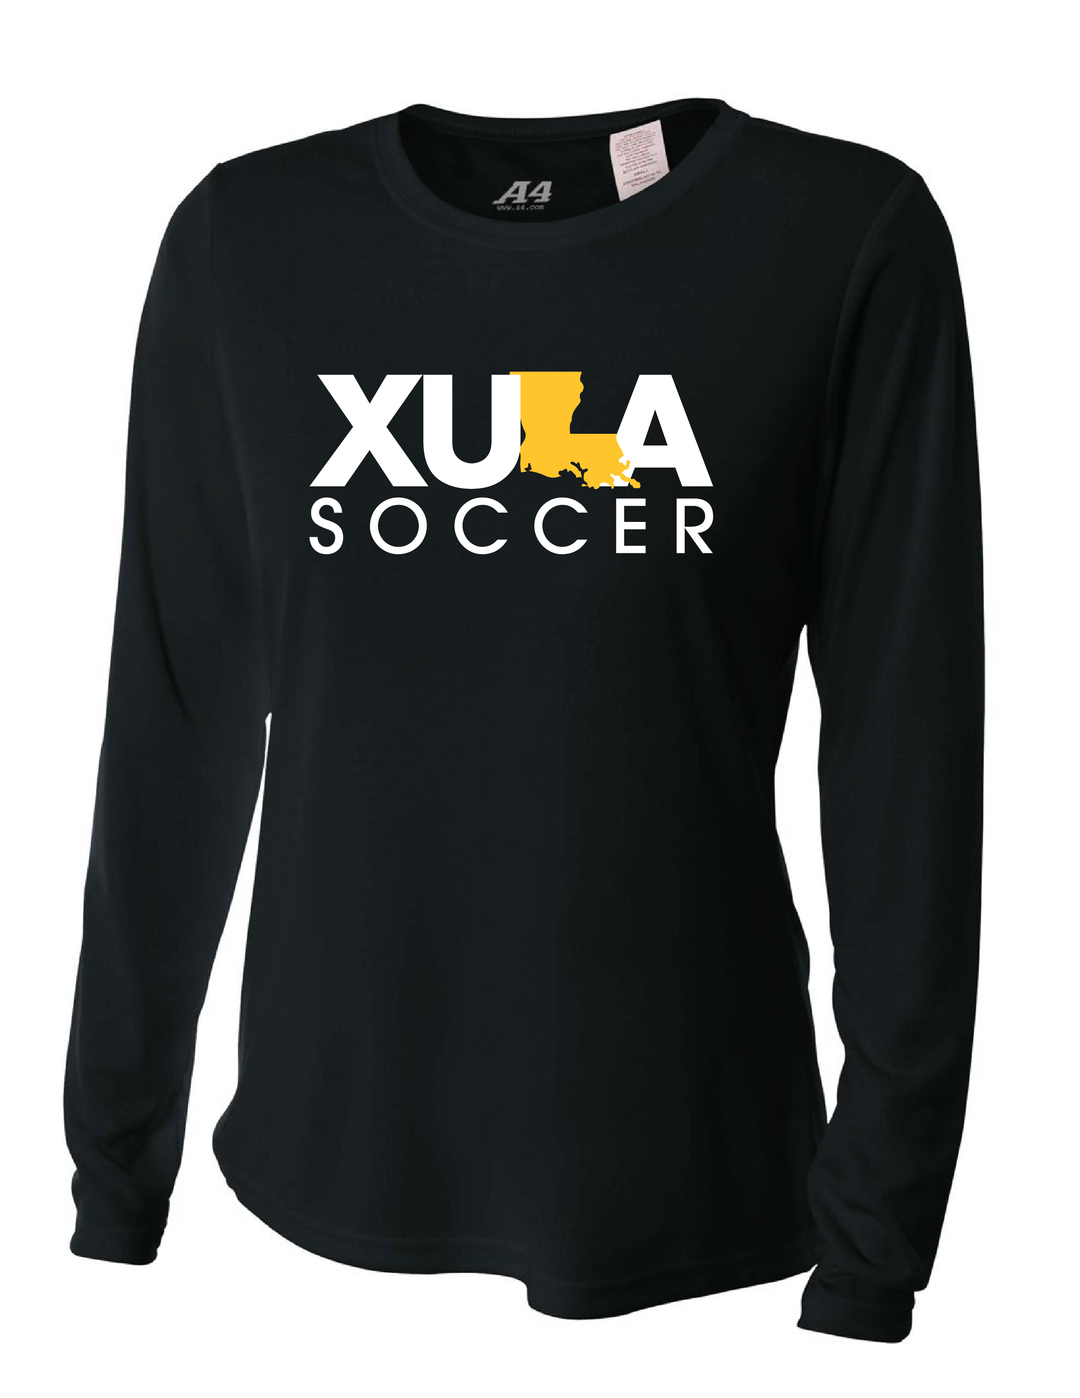 XULA Soccer Long-Sleeve Performance Shirt Xavier University Black Womens Small - Third Coast Soccer